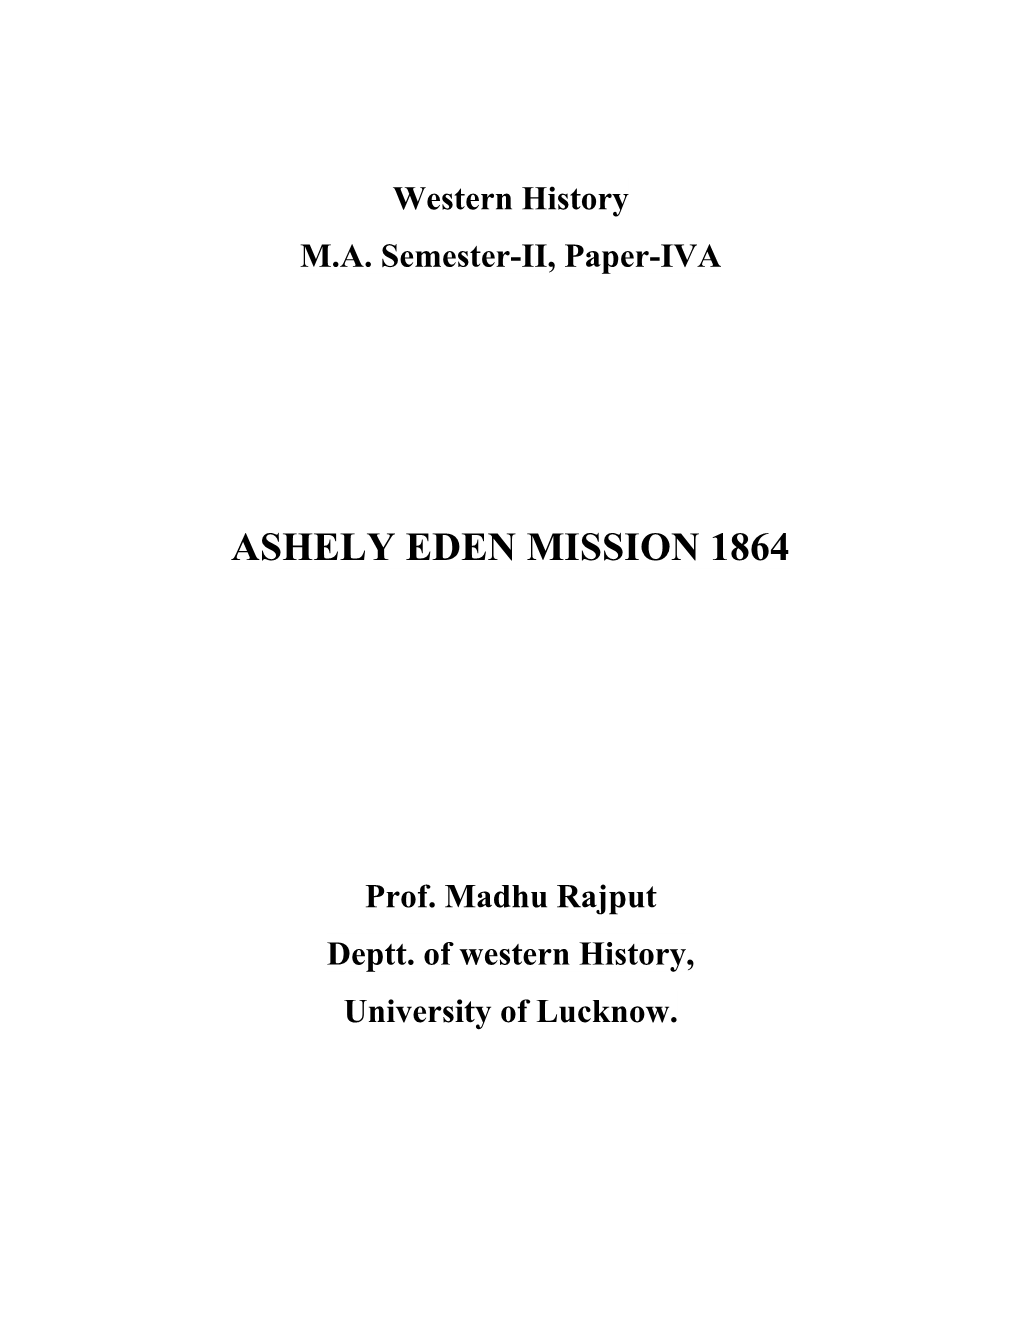 Ashley Eden Mission 1864